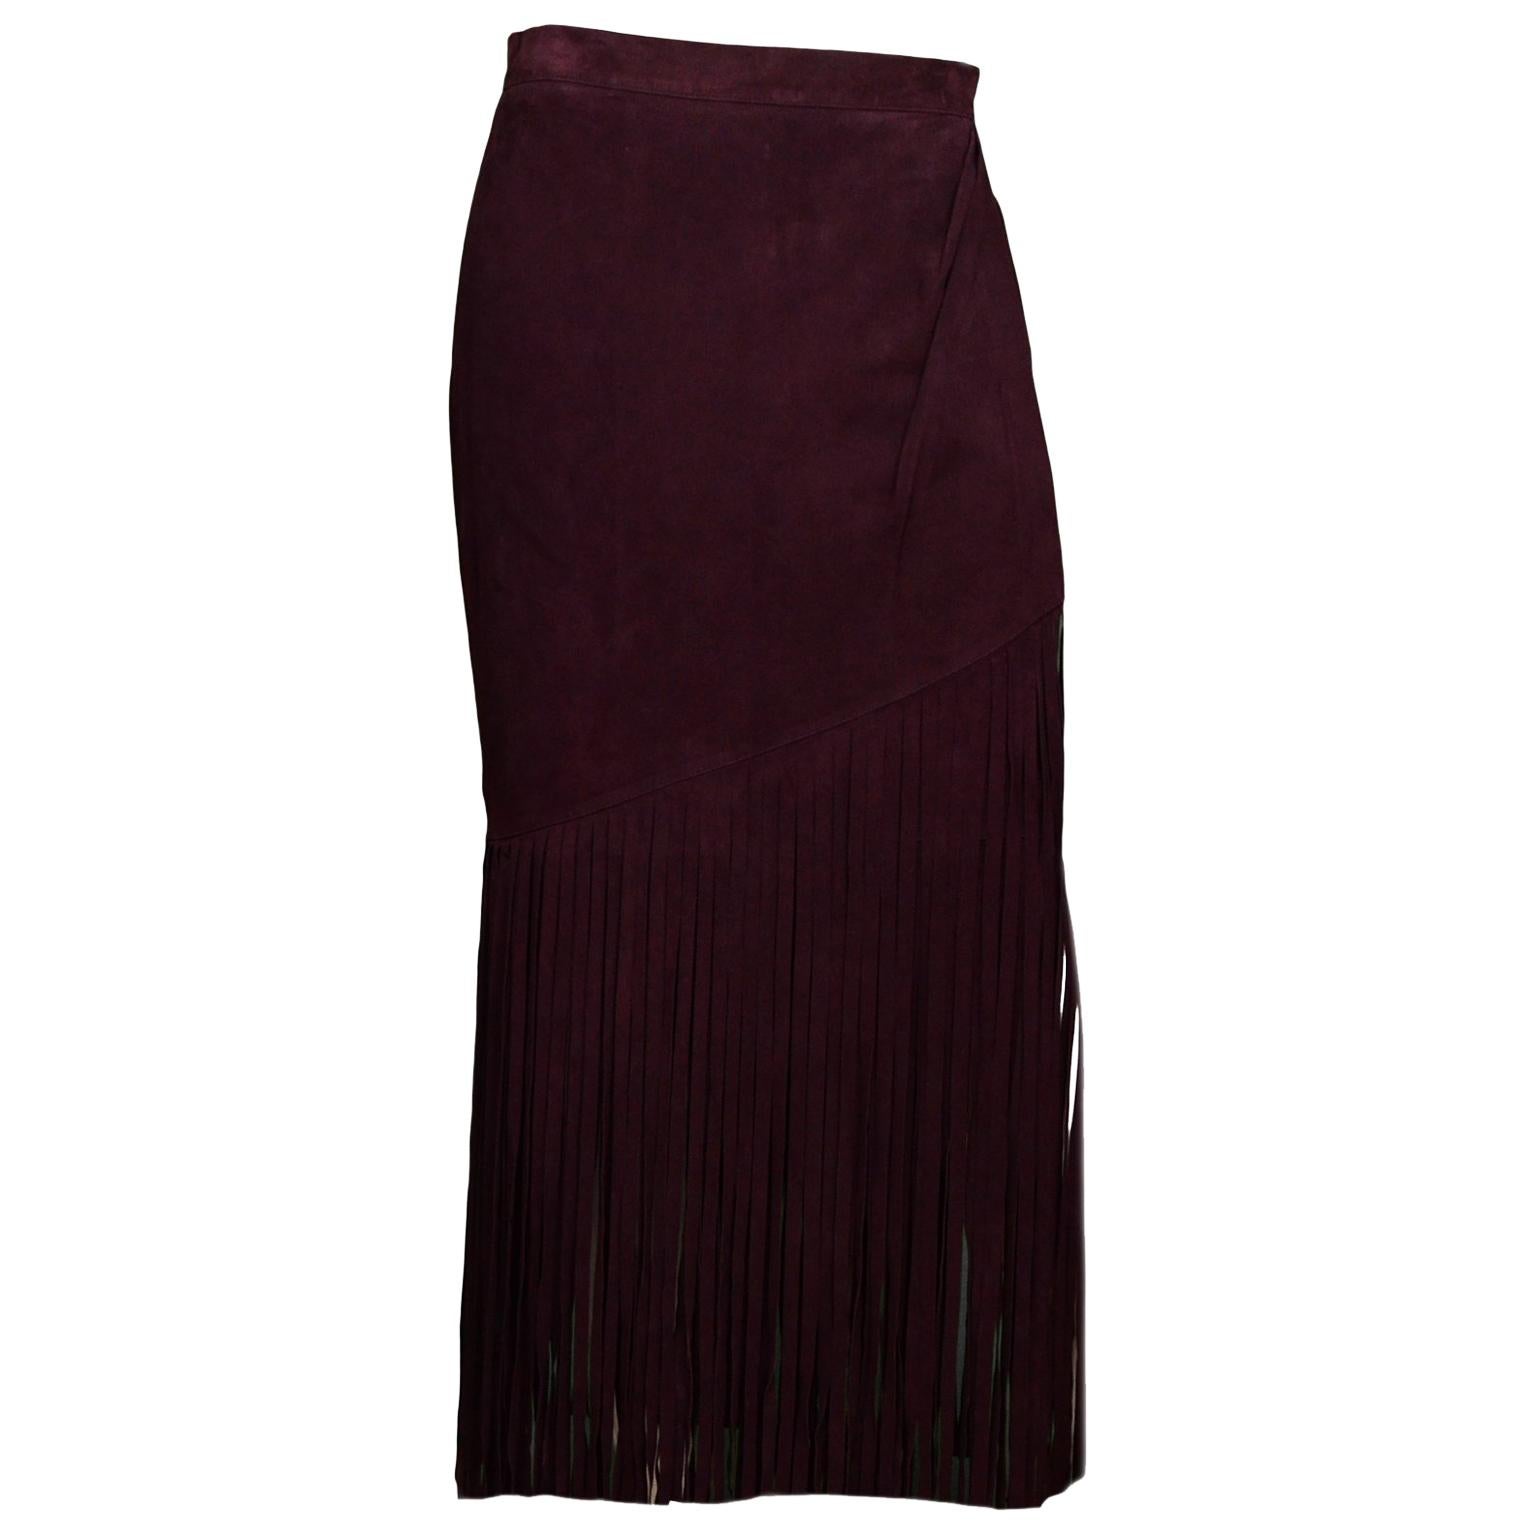 Tamara Mellon Burgundy Suede Fringe Skirt Sz 12 rt. $995